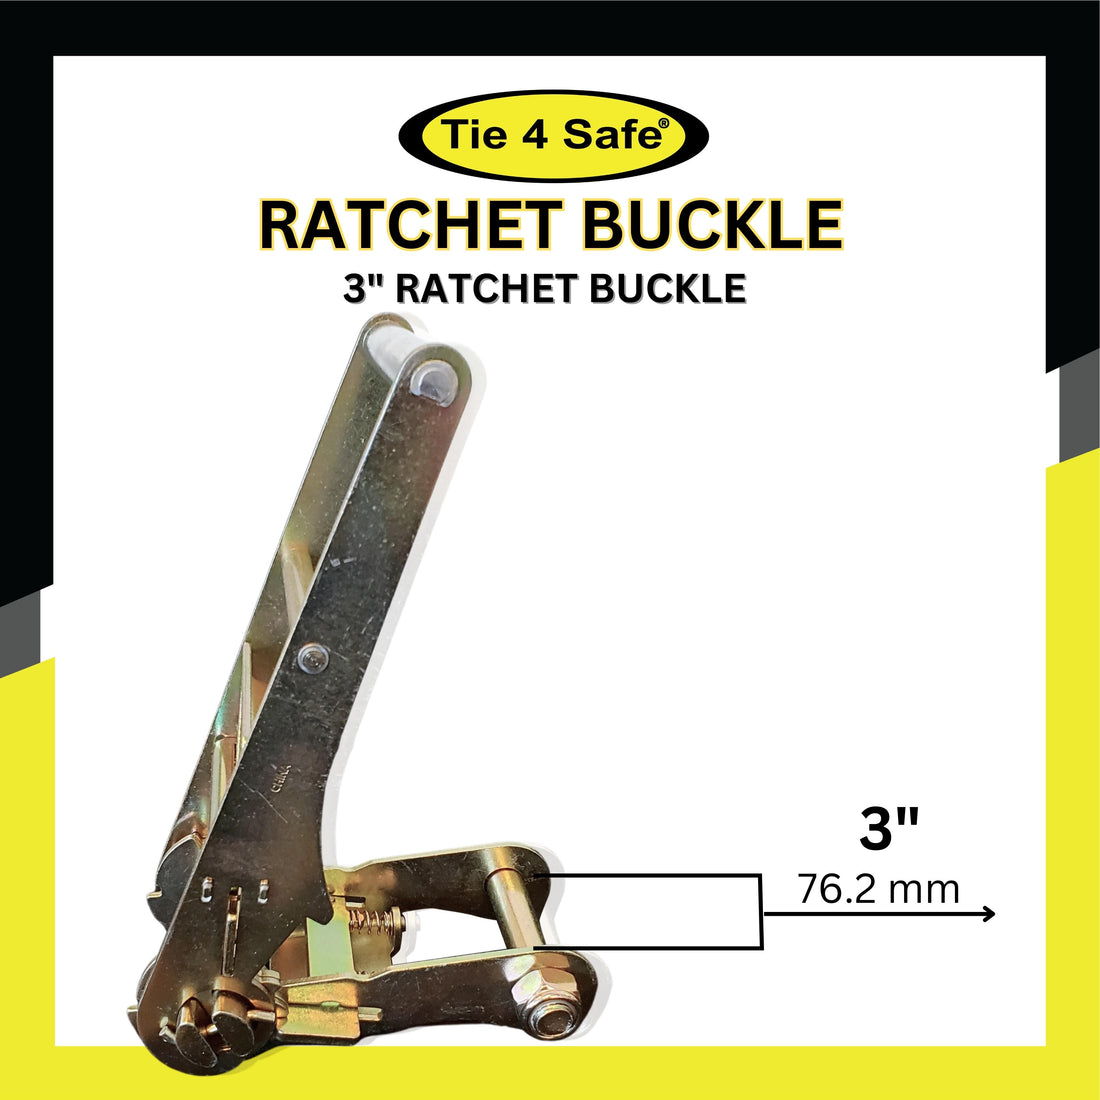 3" Ratchet Buckle